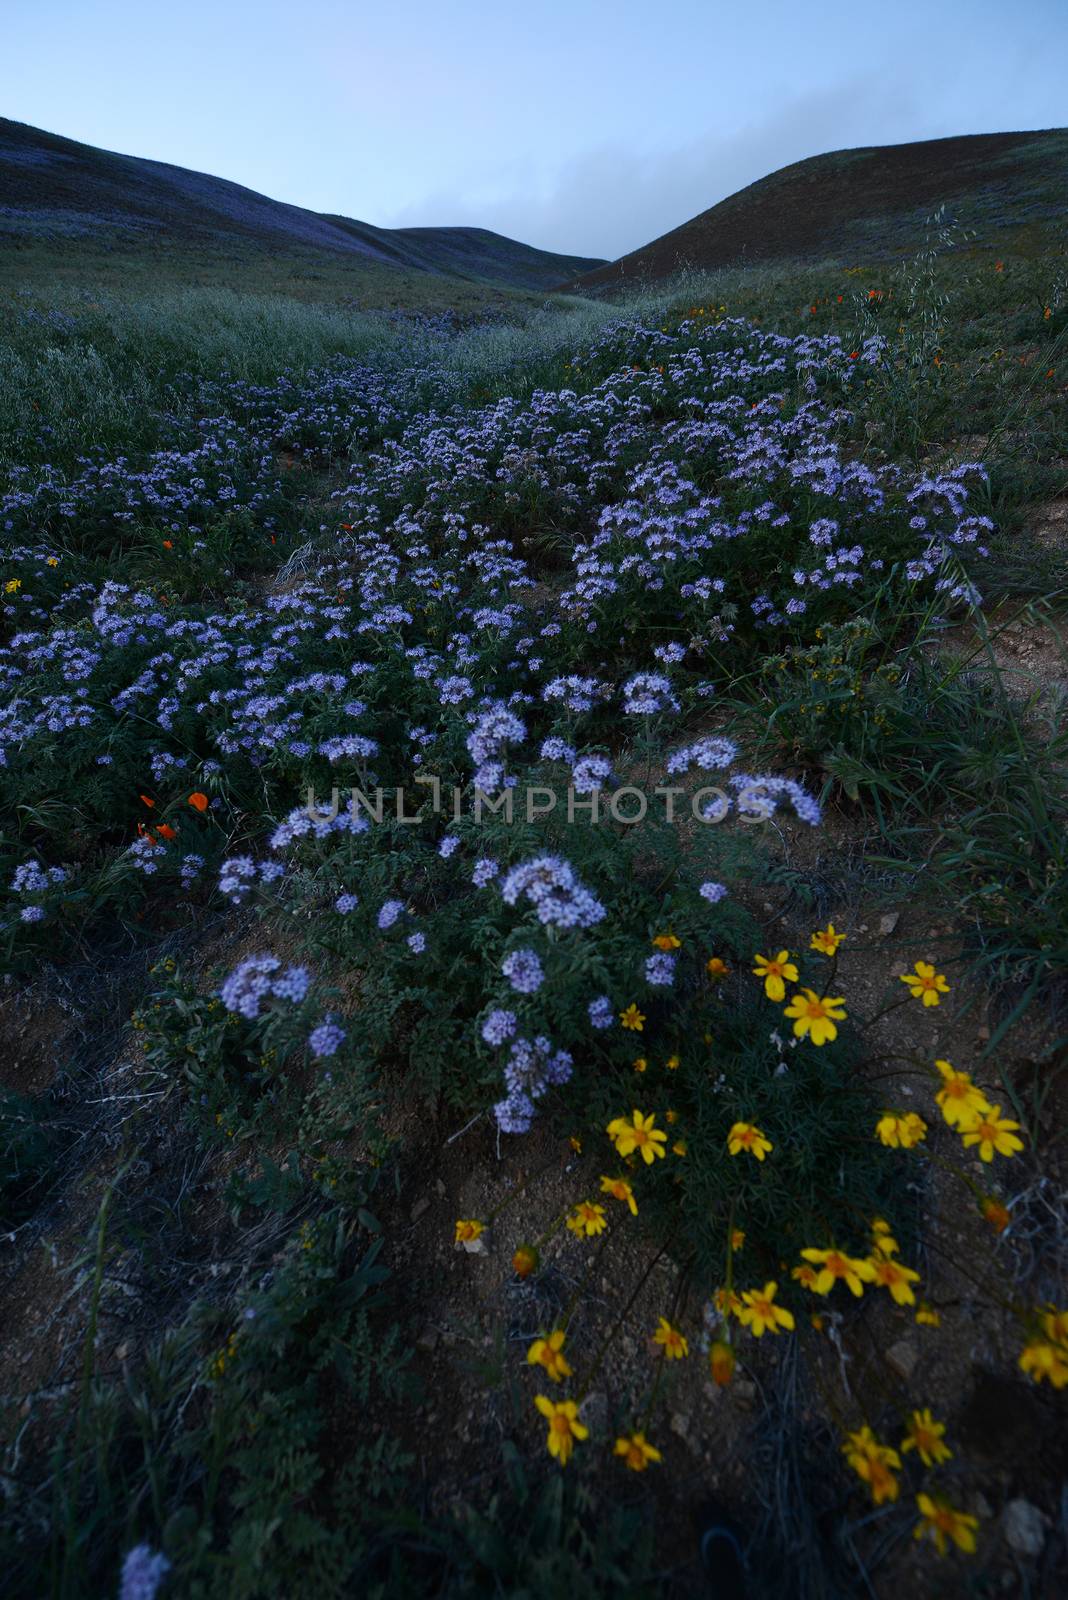 wildflowers on grass hill near los angeles